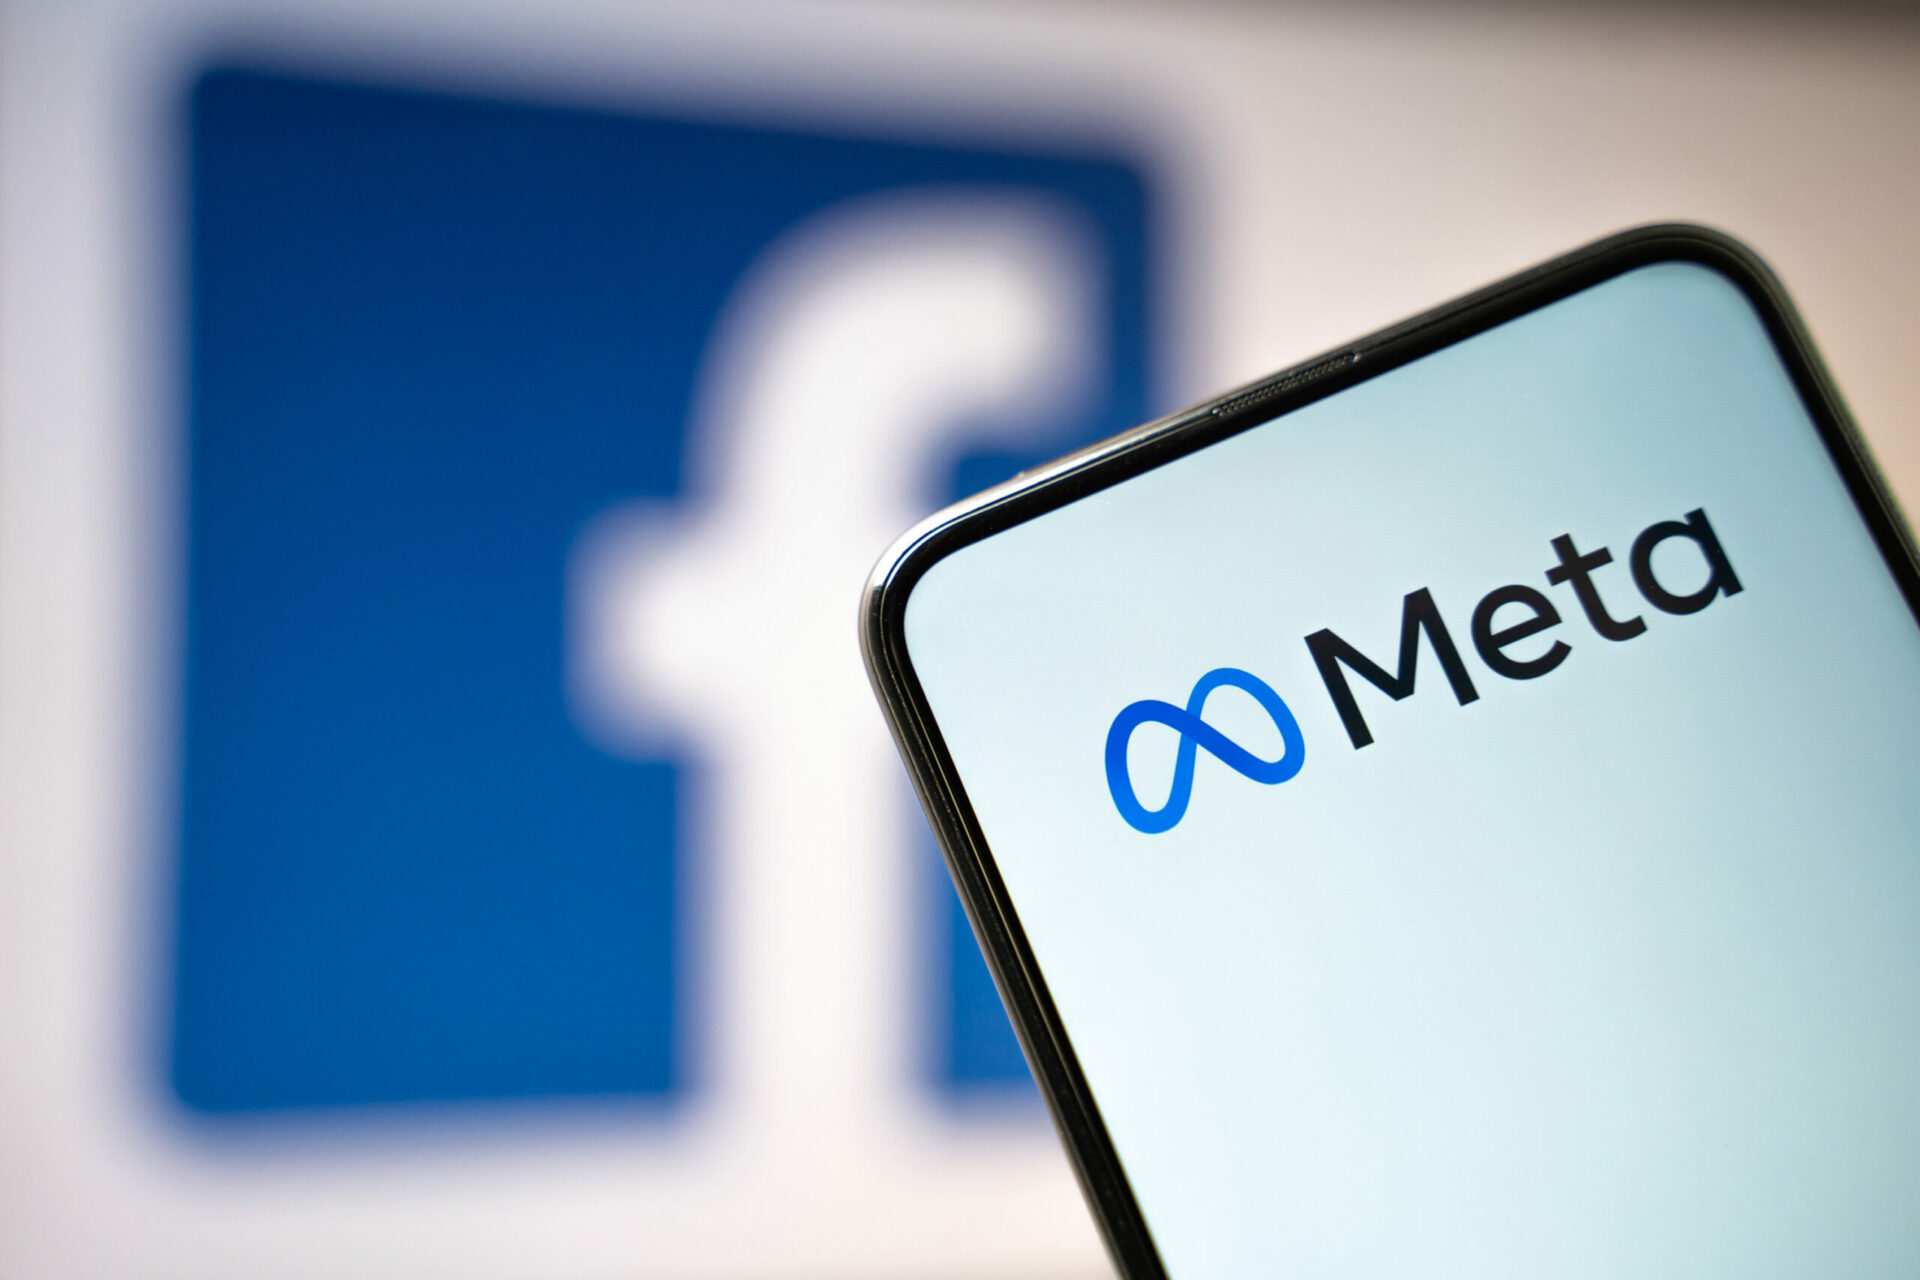 Facebook Live copied tech from war veteran’s app, jury finds in 5-million verdict